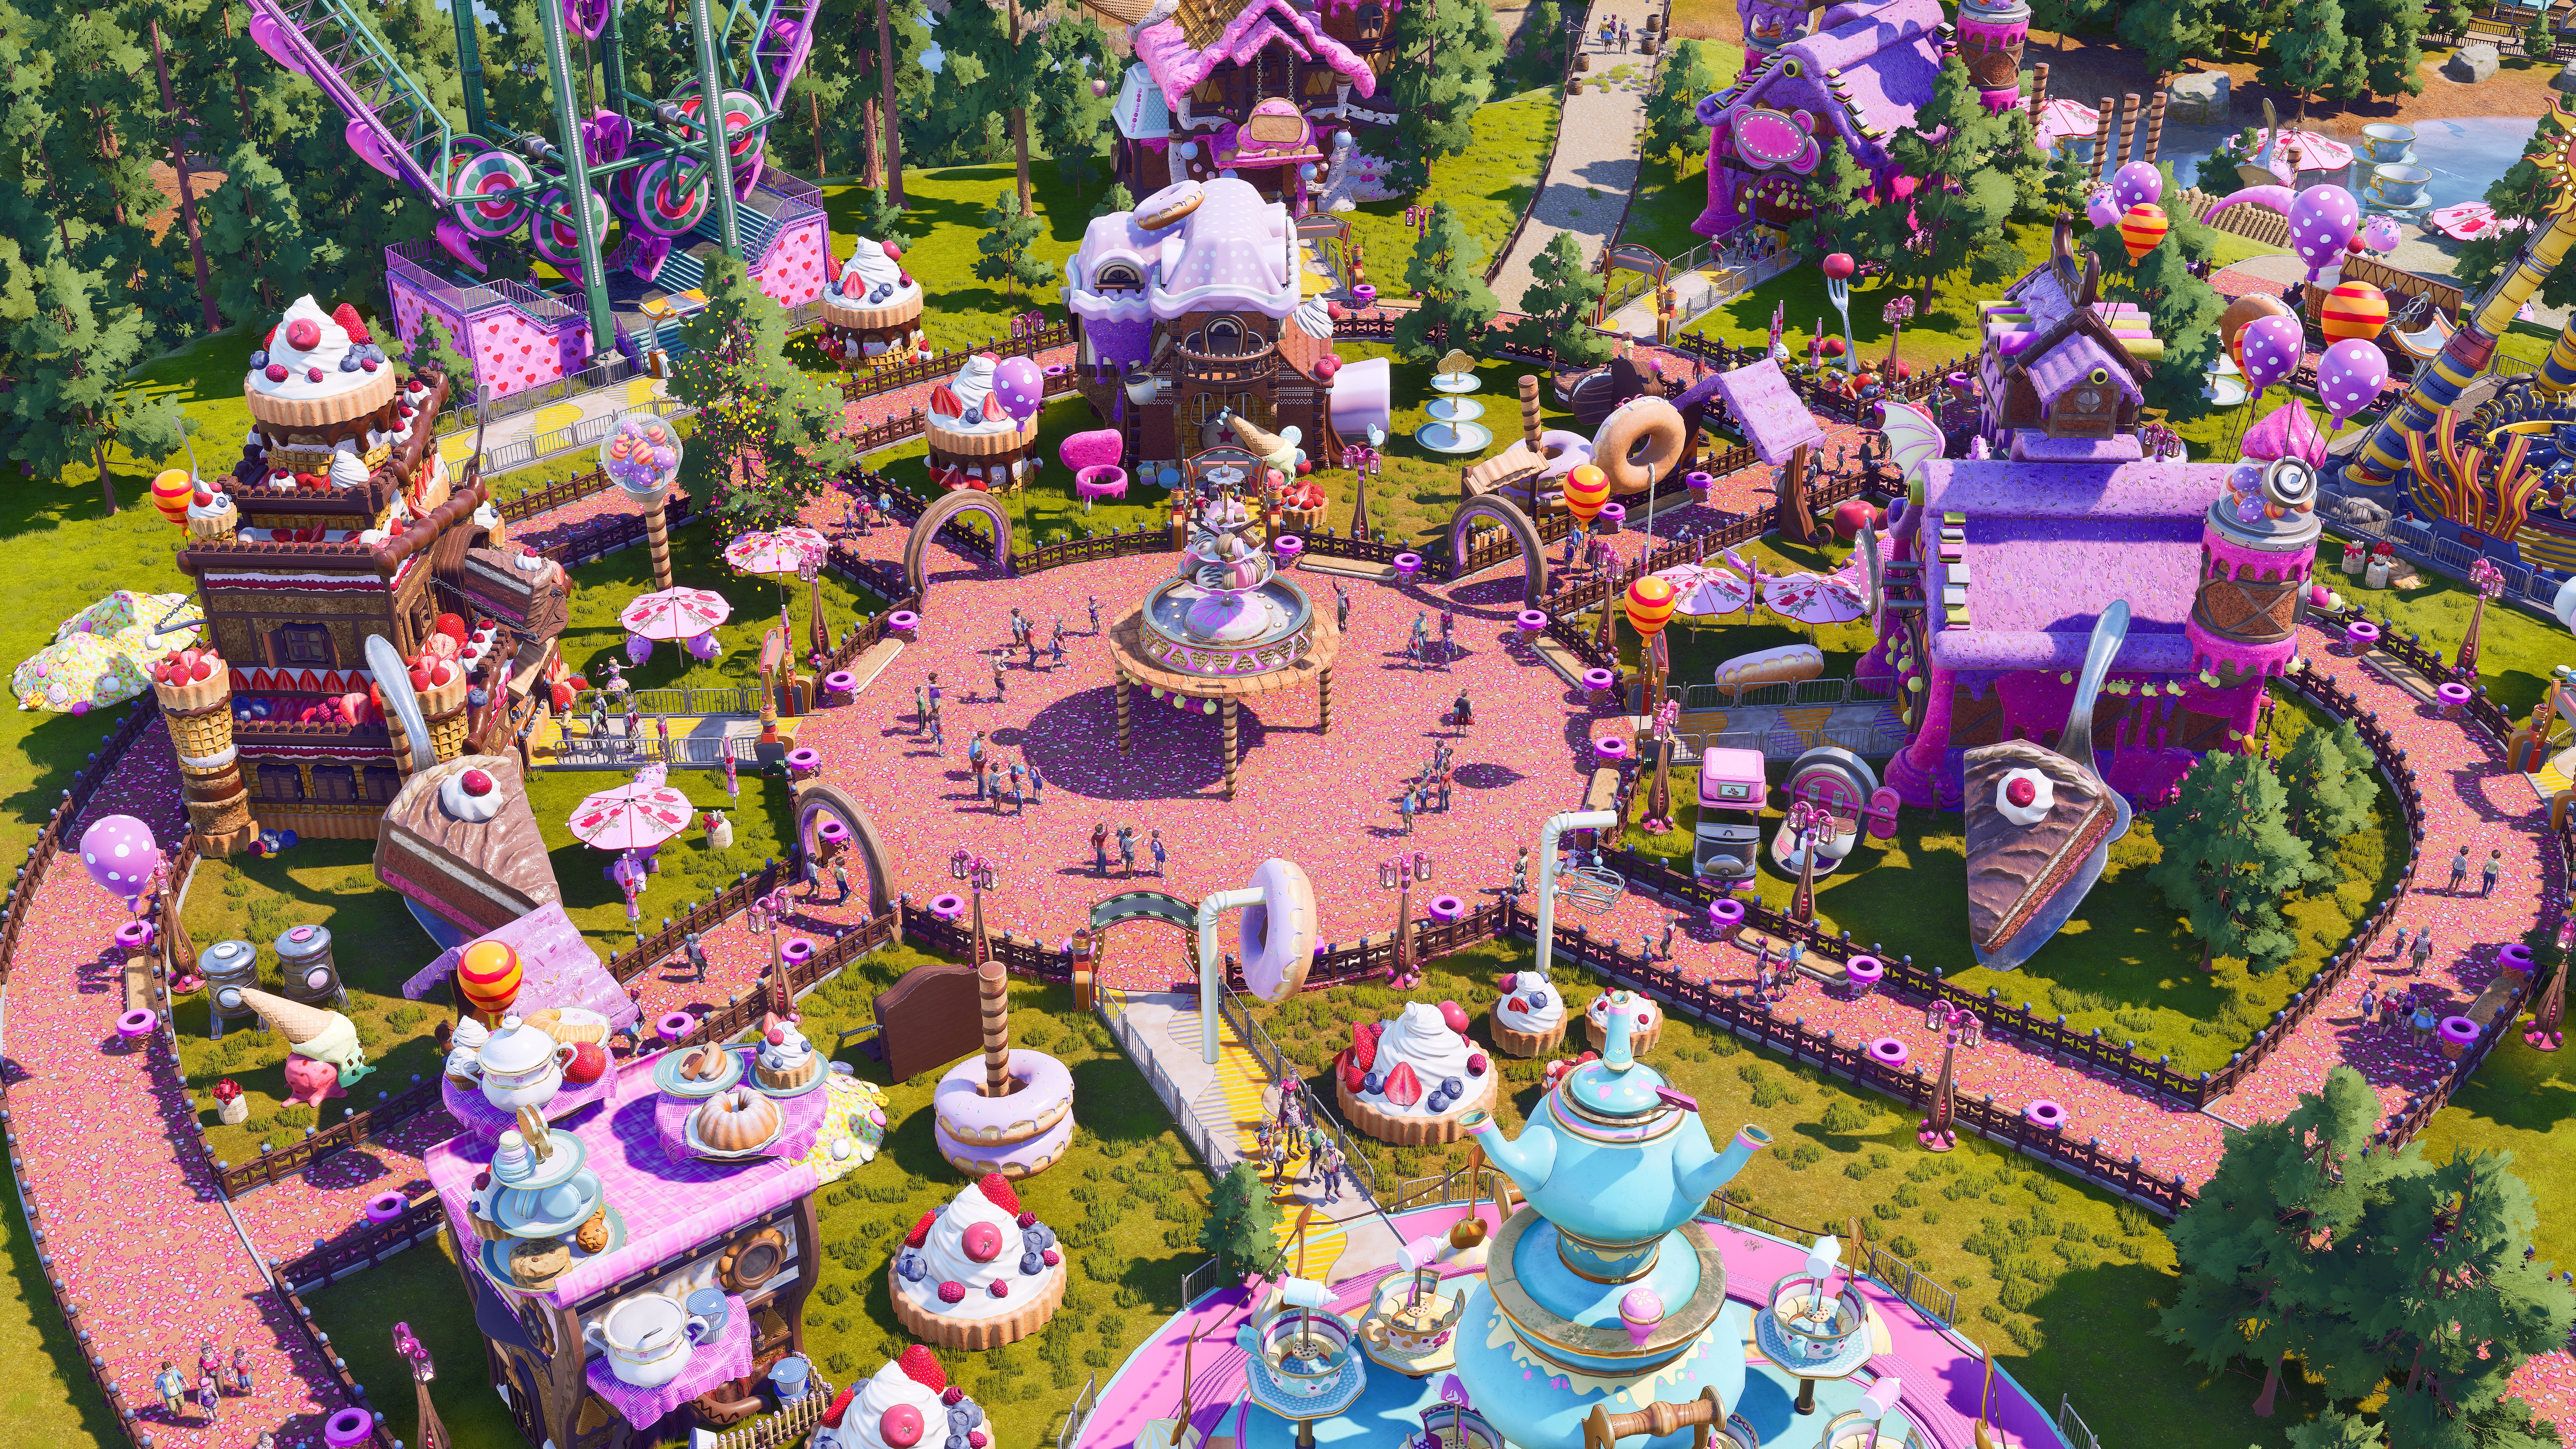 A Candyland-themed park